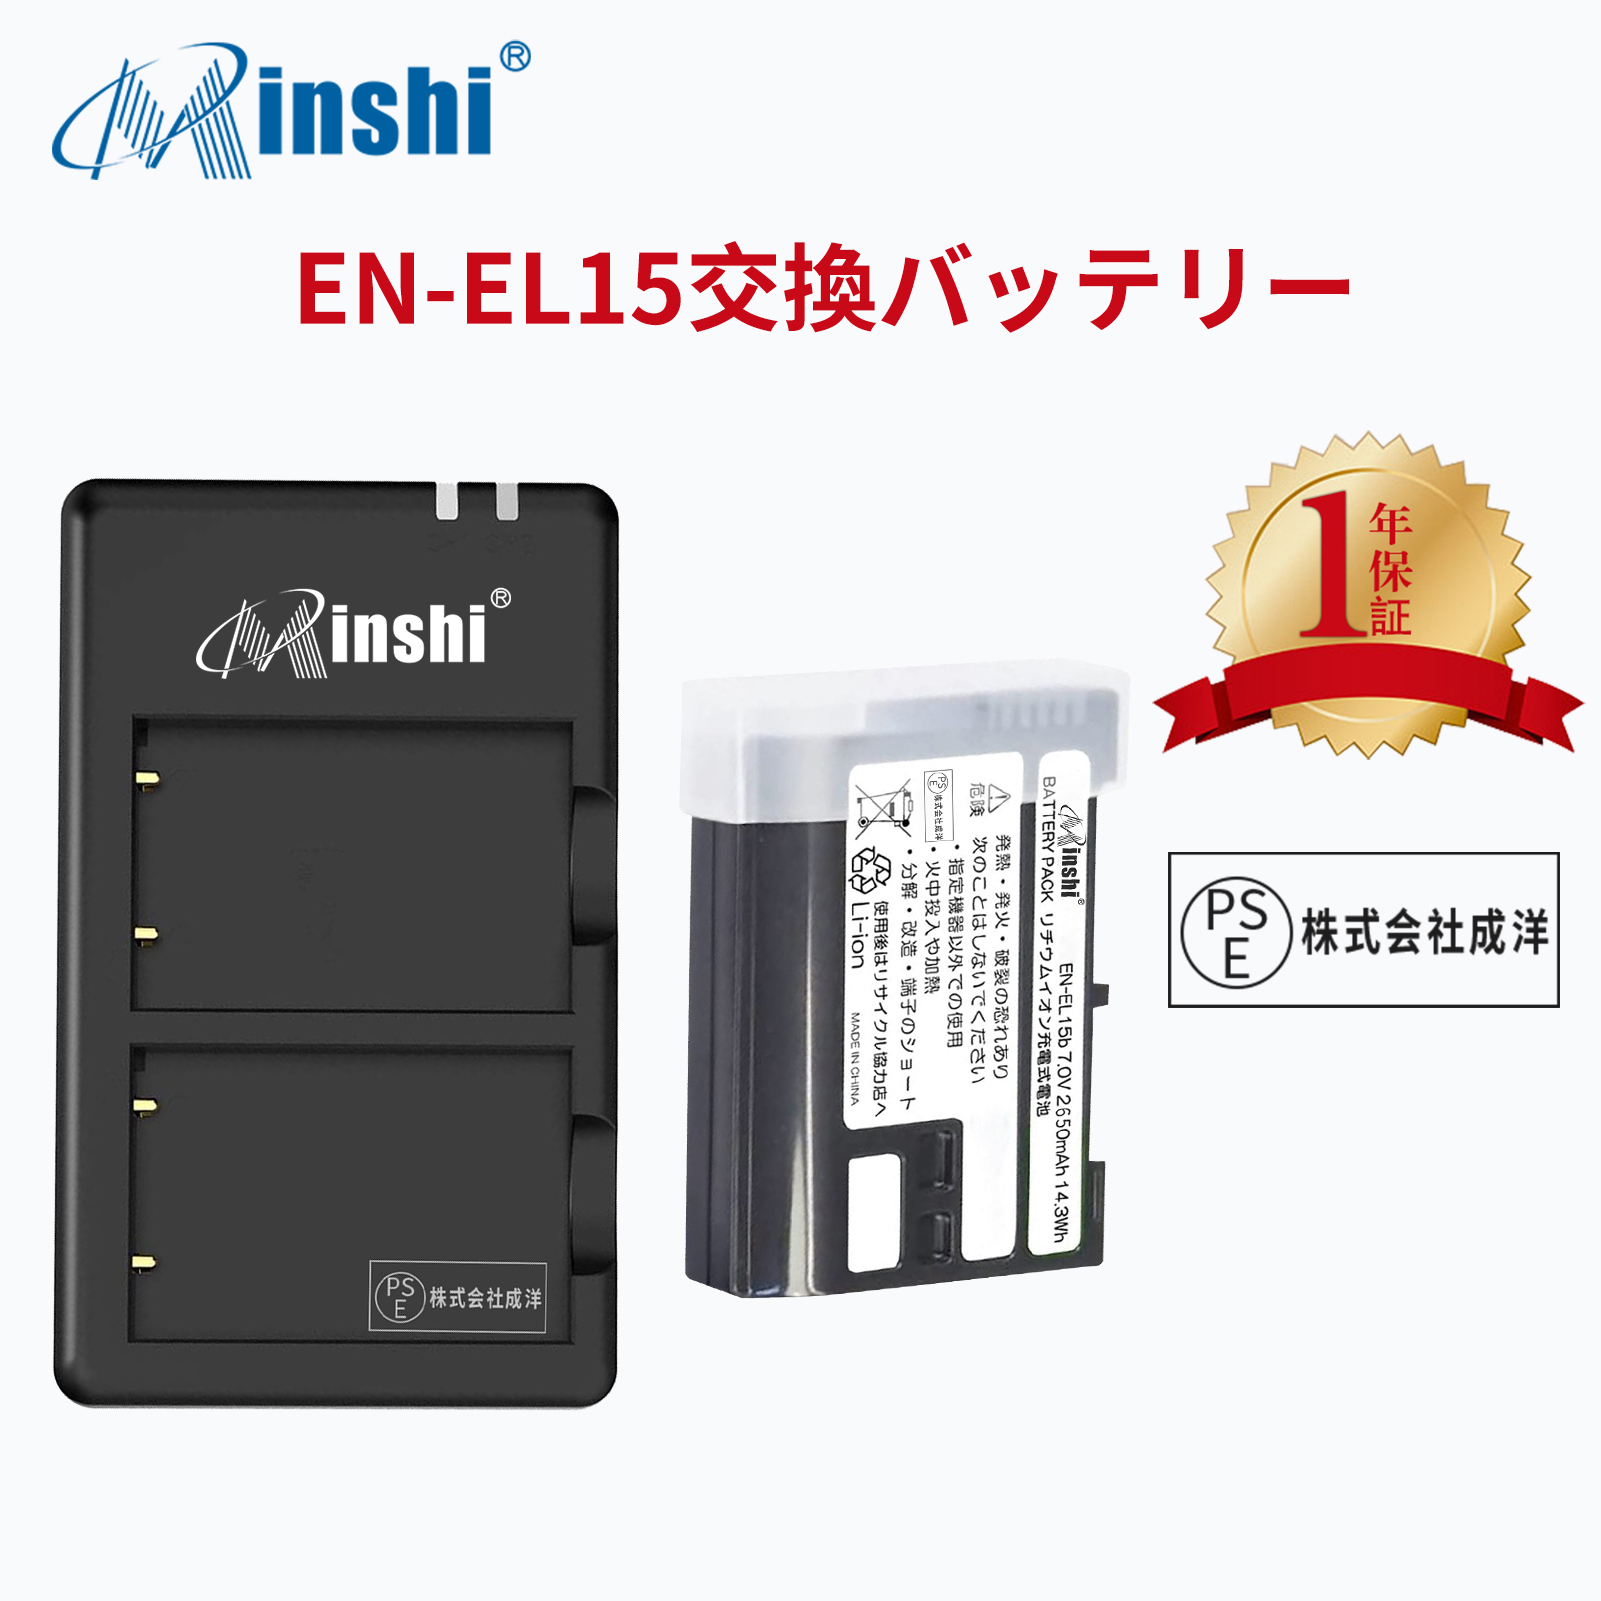 【1年保証】minshi Nikon D850 EN-EL15 EN-EL15C 【2650mAh 7.0V】【互換急速USBチャージャー】 Z6 Z7 D750 PSE認定済 高品質EN-EL15交換用バッテリー